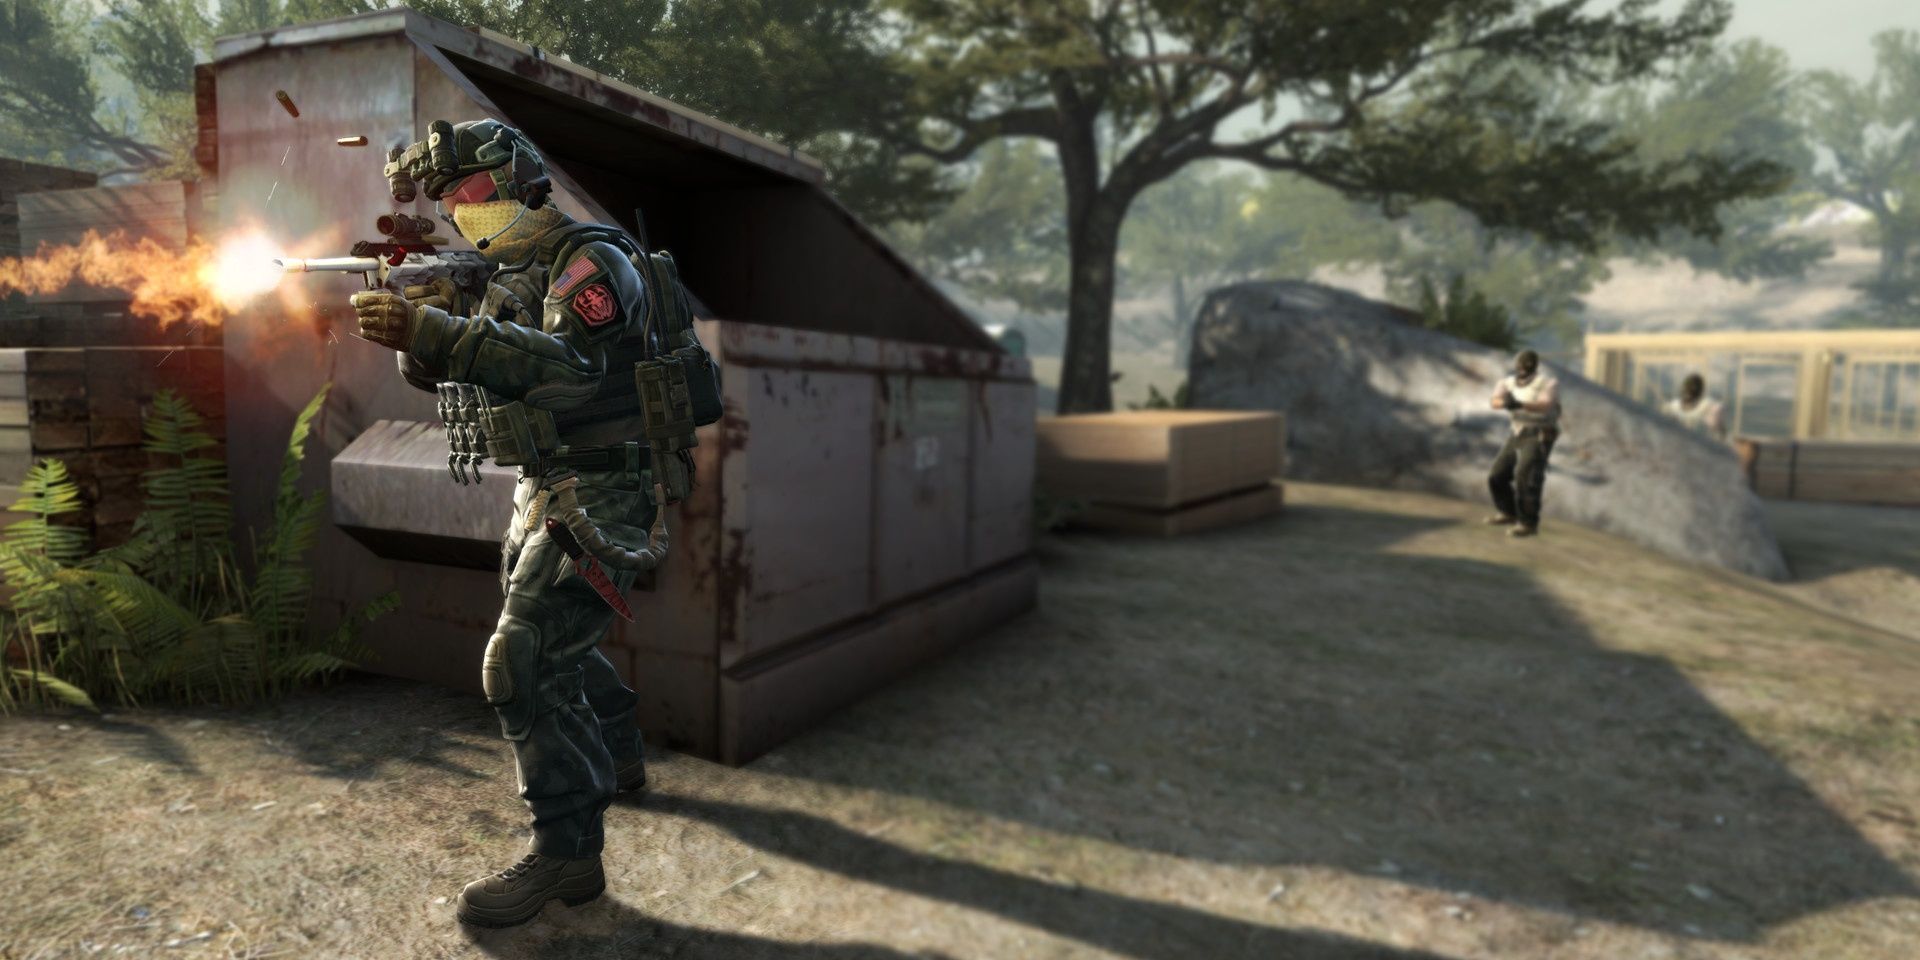 A screenshot showing a player firing a rifle in Counter-Strike:Global Offensive